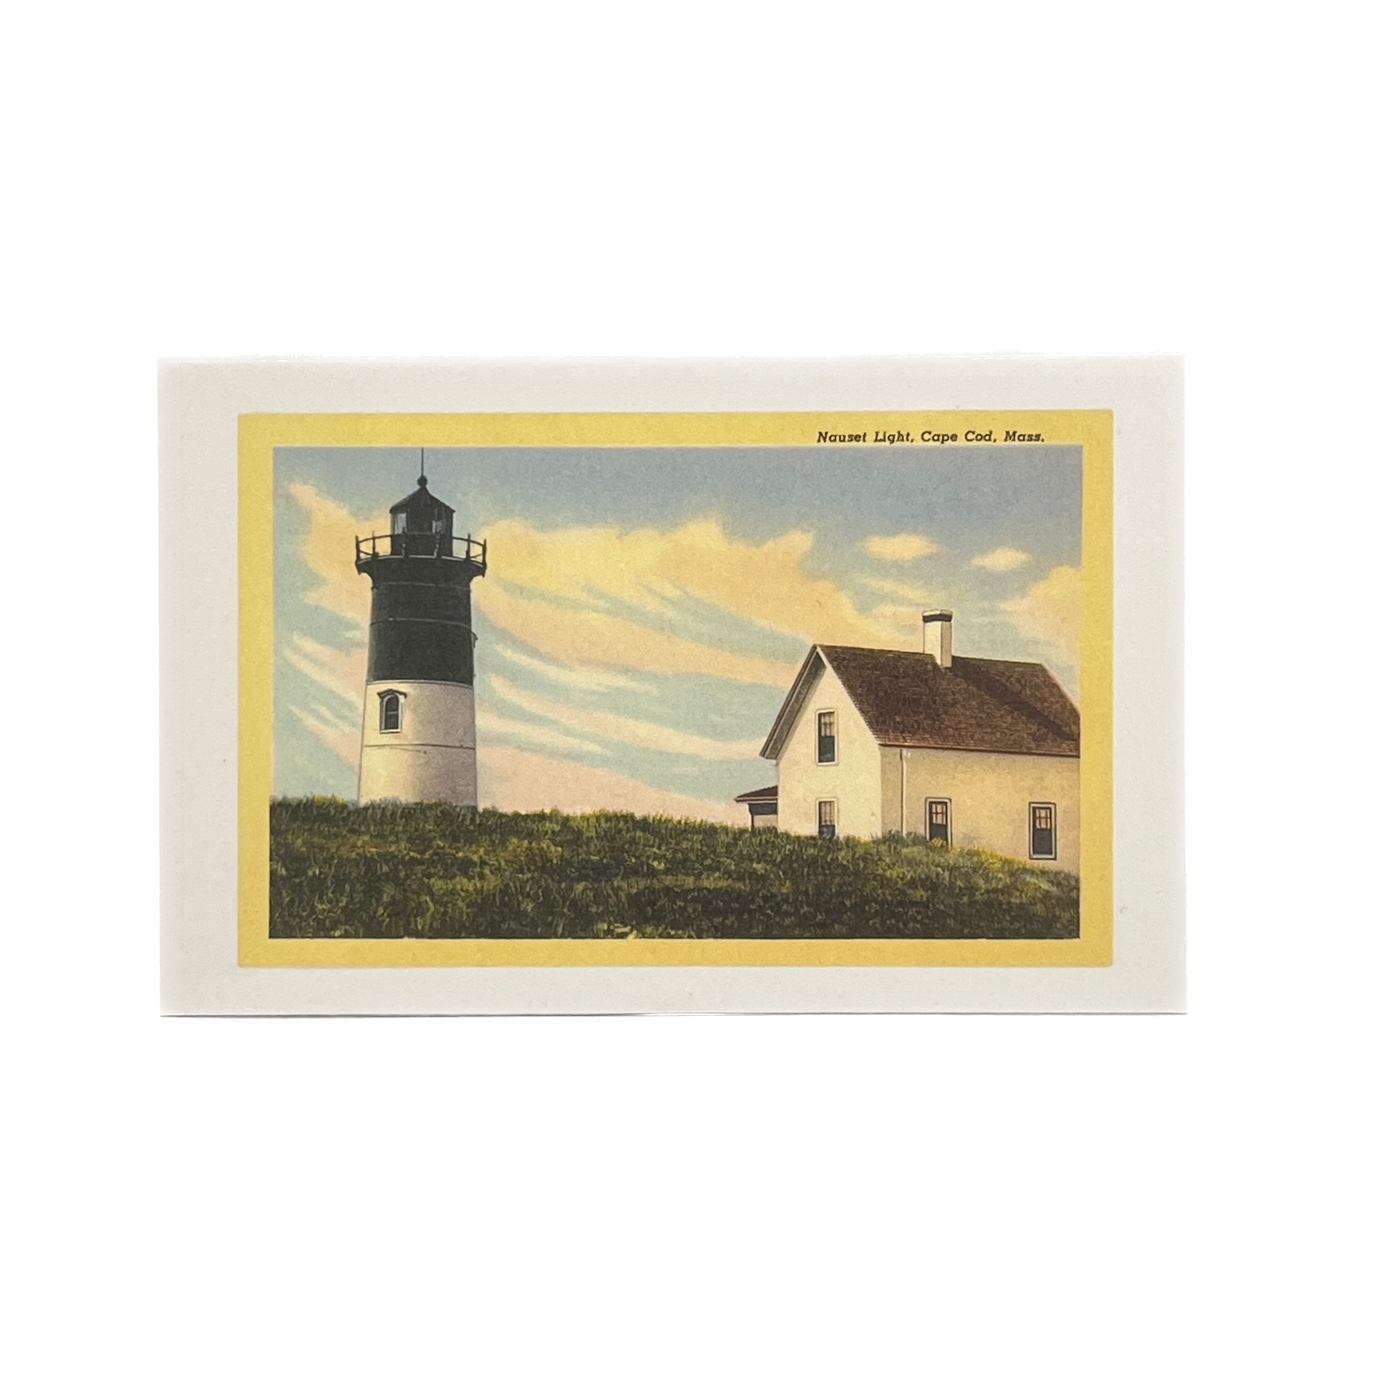 Vintage Image, Postcard - Nauset Lighthouse, Cape Cod, Mass.